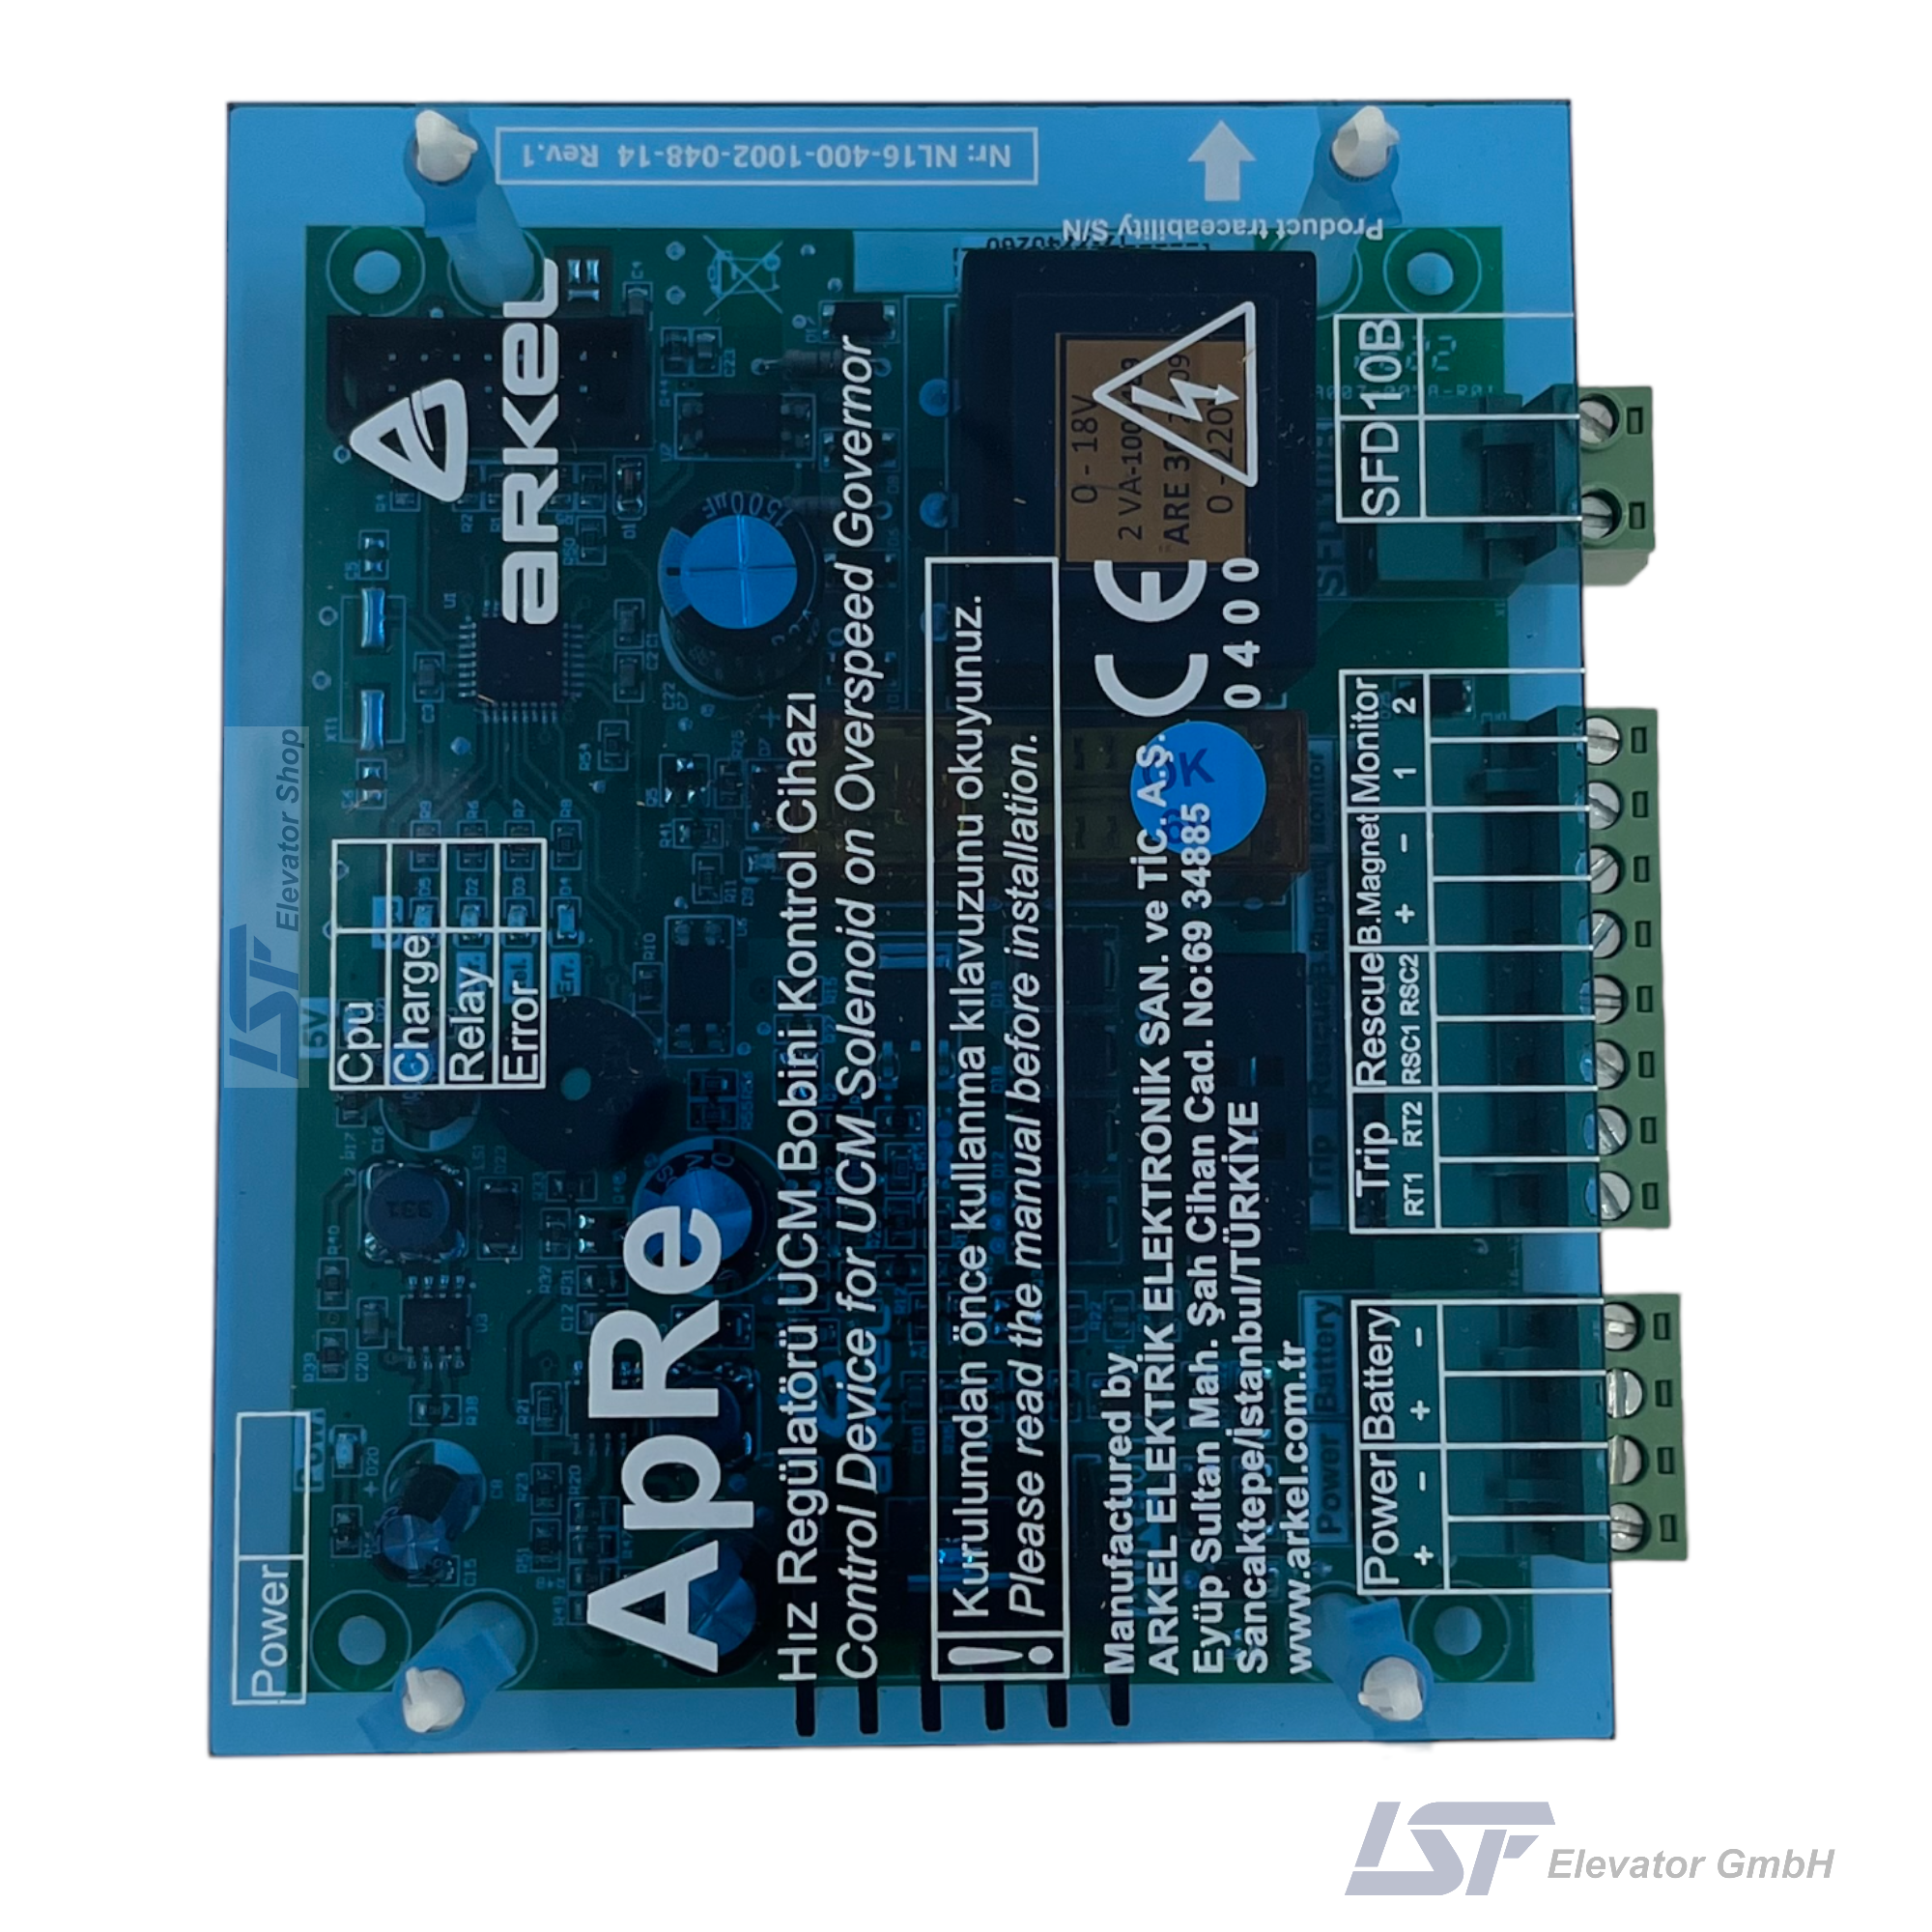 ApRe Arkel Clamping Device Activation Unit for EN81-1+A3 (1)